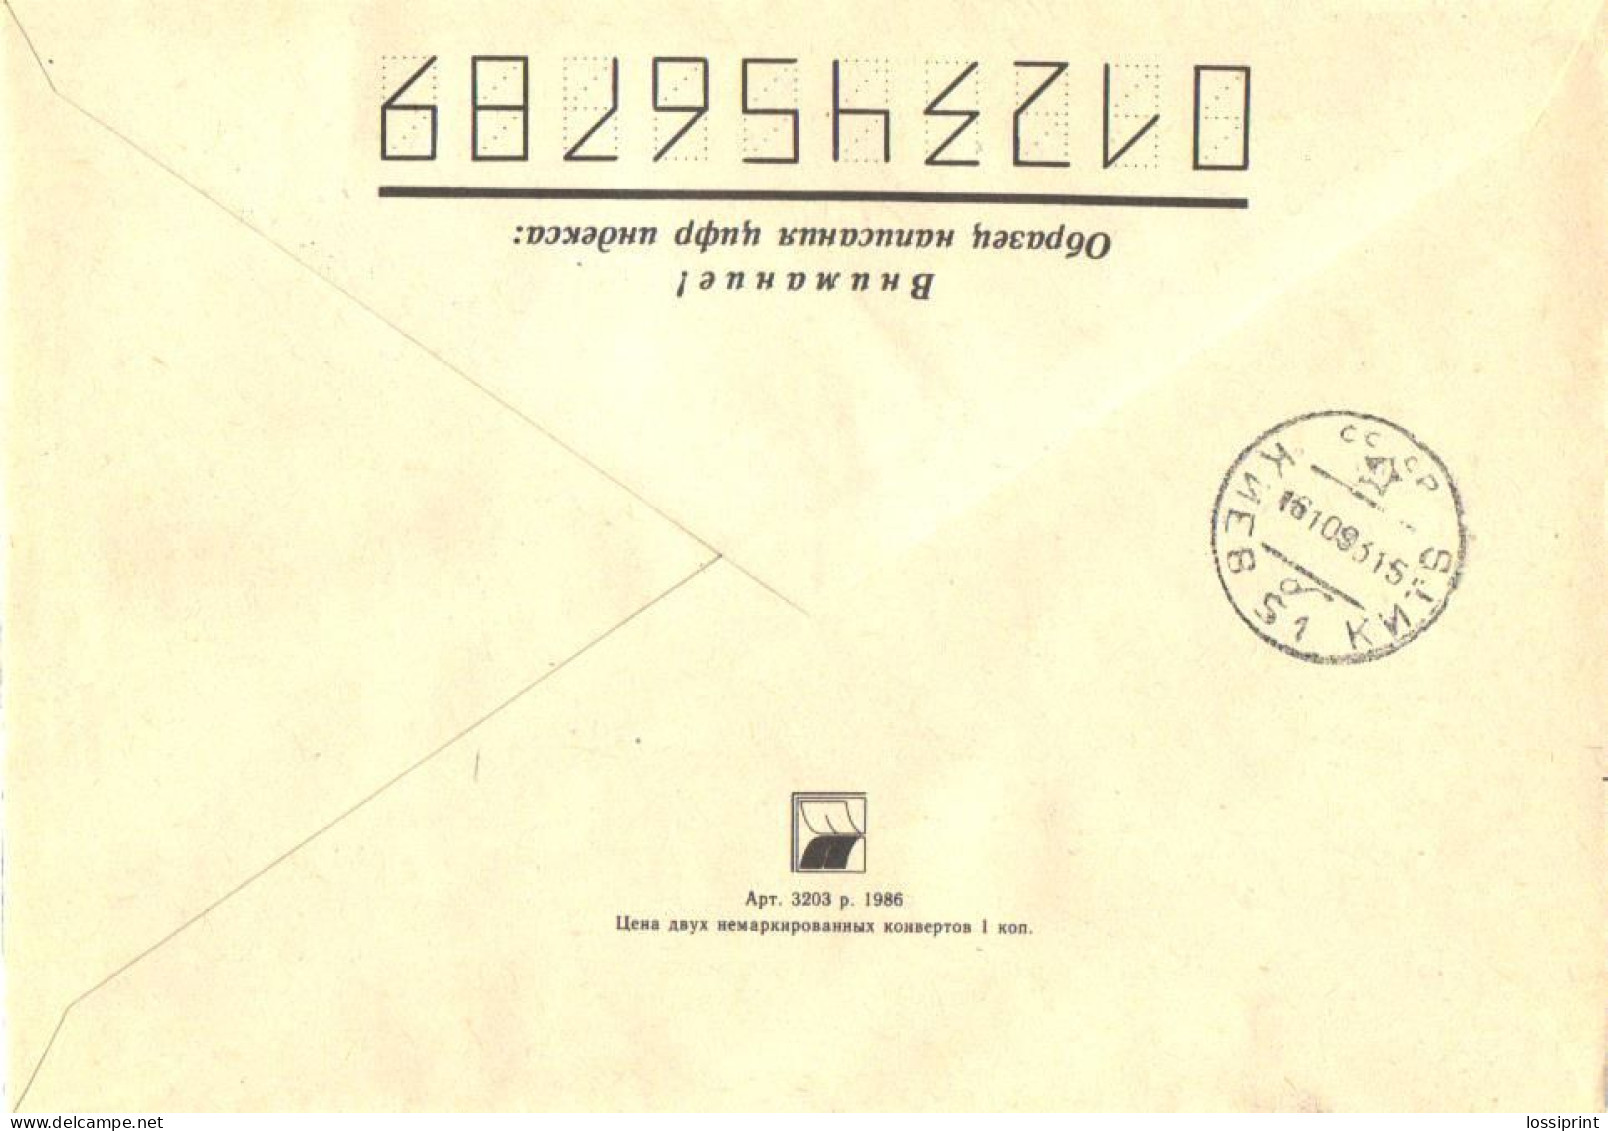 Ukraine:Ukraina:Registered Letter From Obuhov With Overprinted Stamp, 1993 - Ukraine